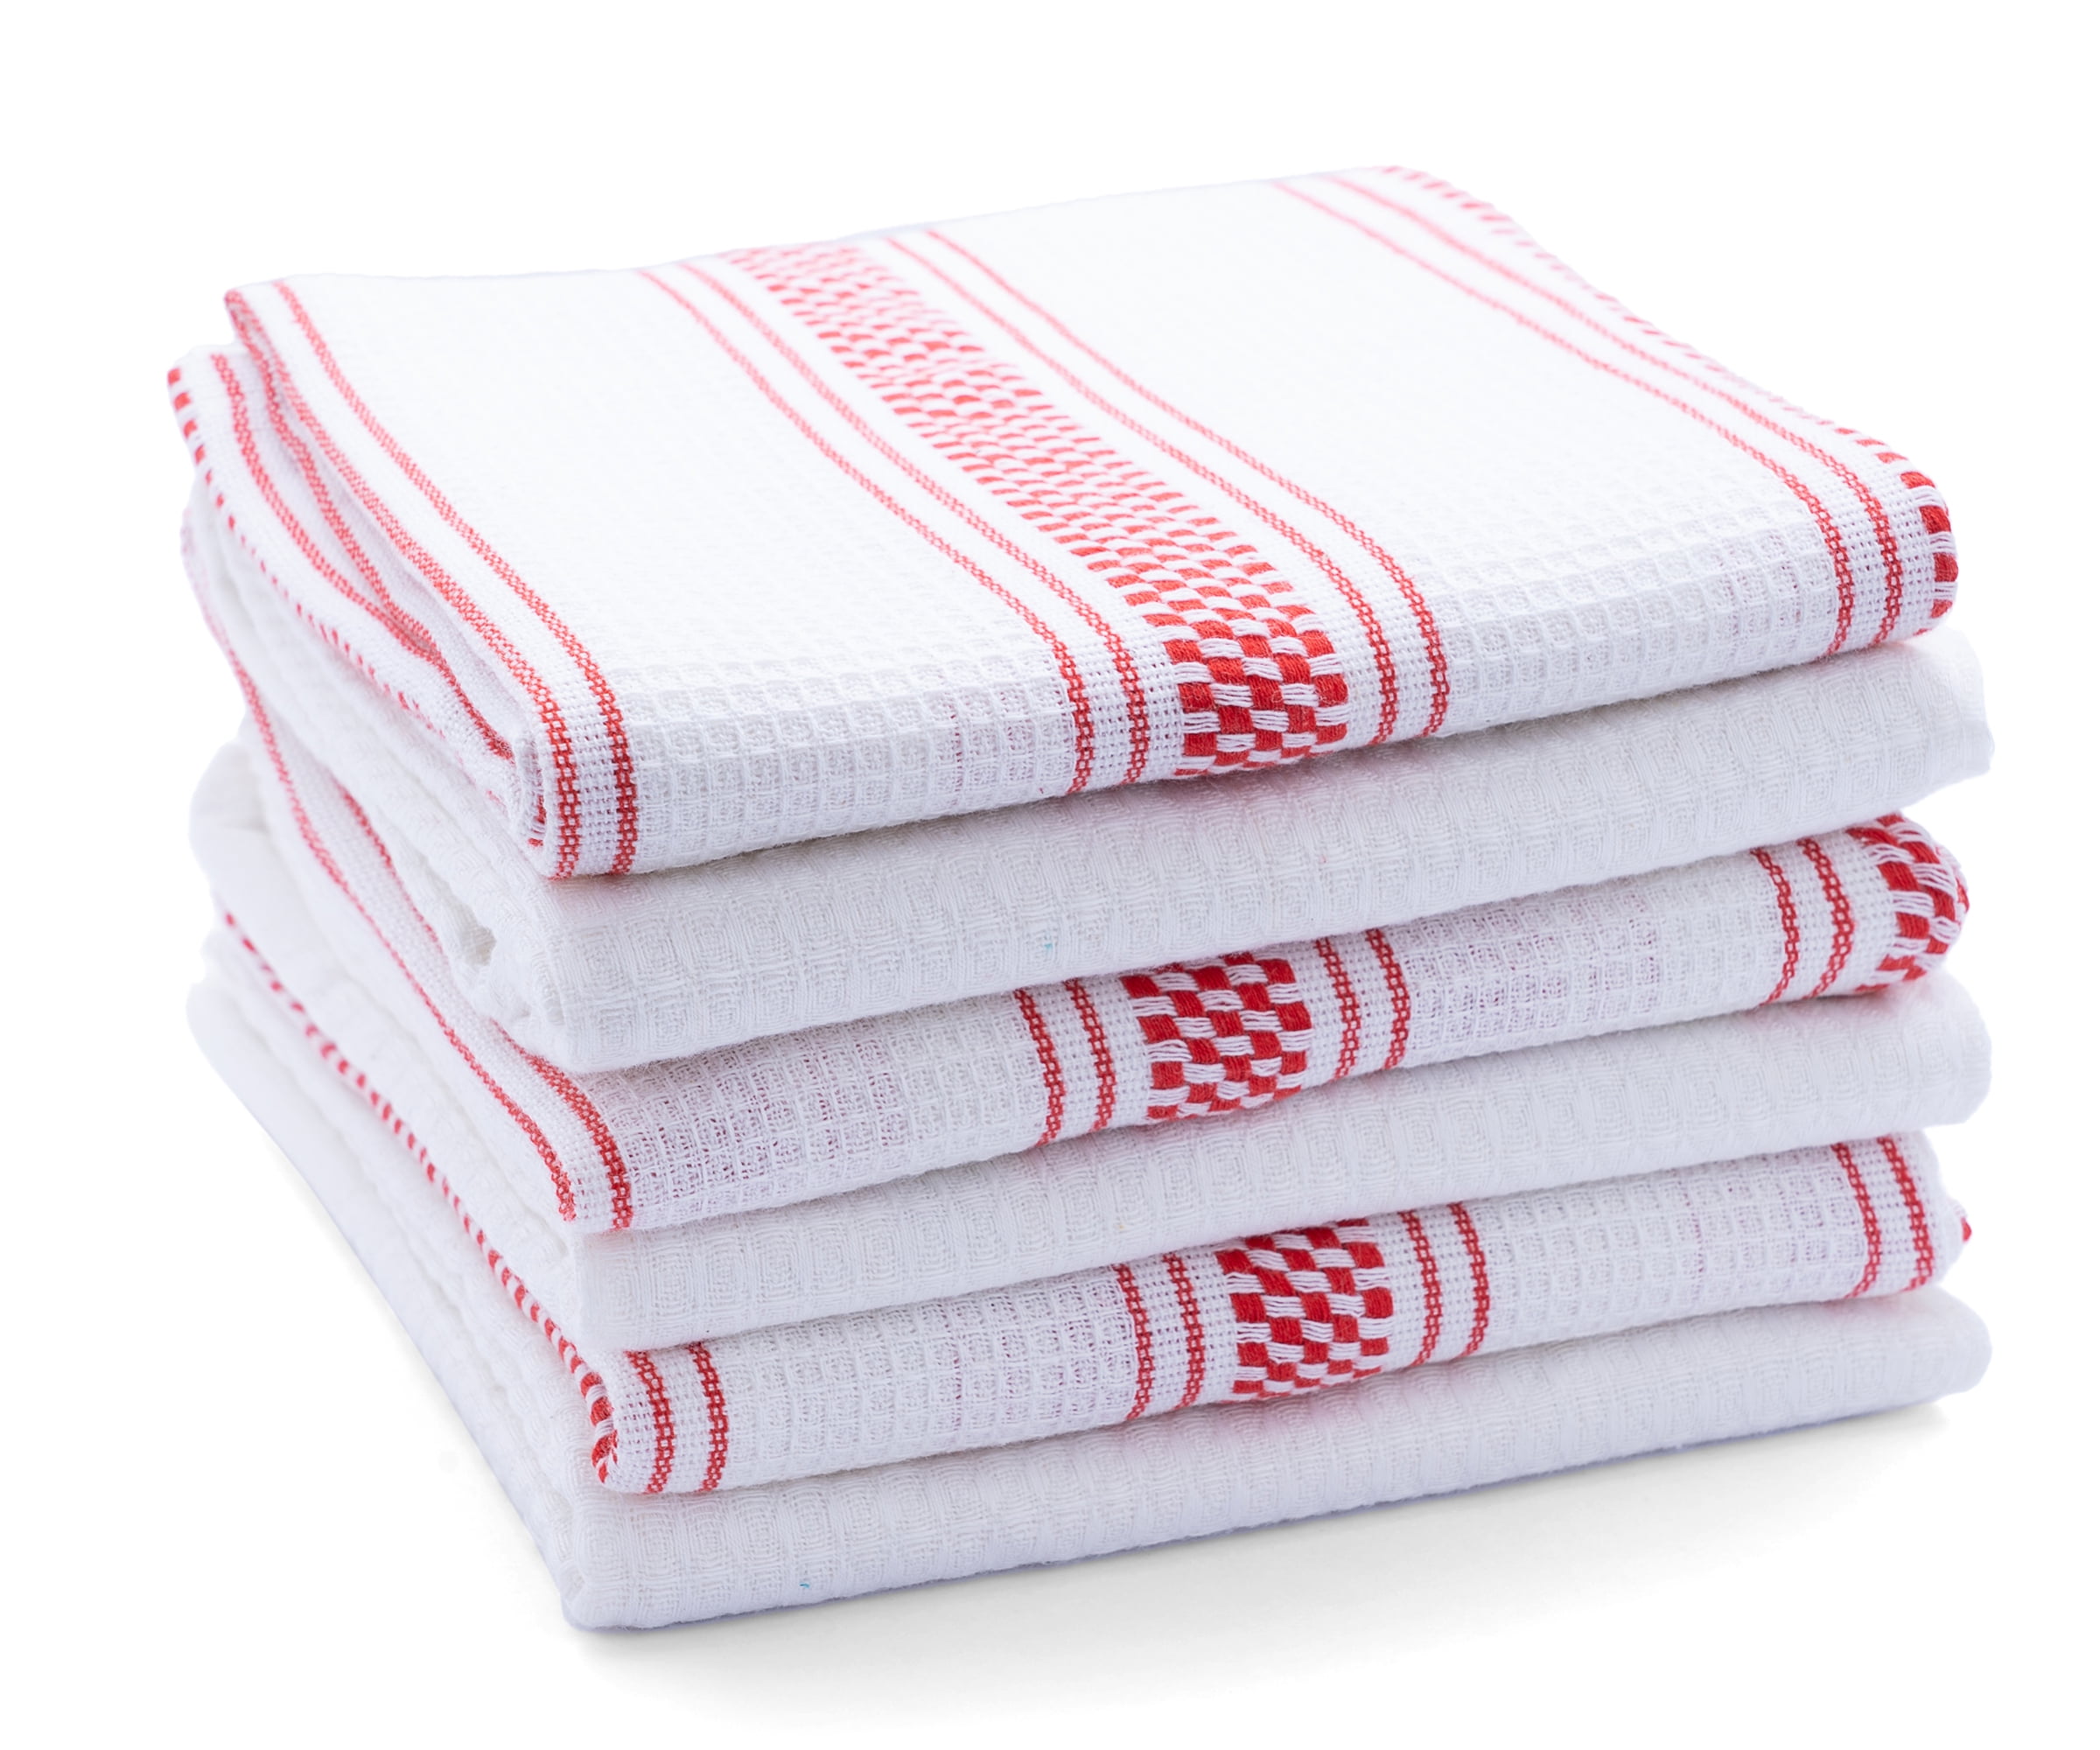 Teal Kitchen Towels Cotton Dish Towels Farmhouse Hand Towels Bulk Absorbent Tea  Towels Striped Linen Kitchen Decor Set of 6, 18x28 